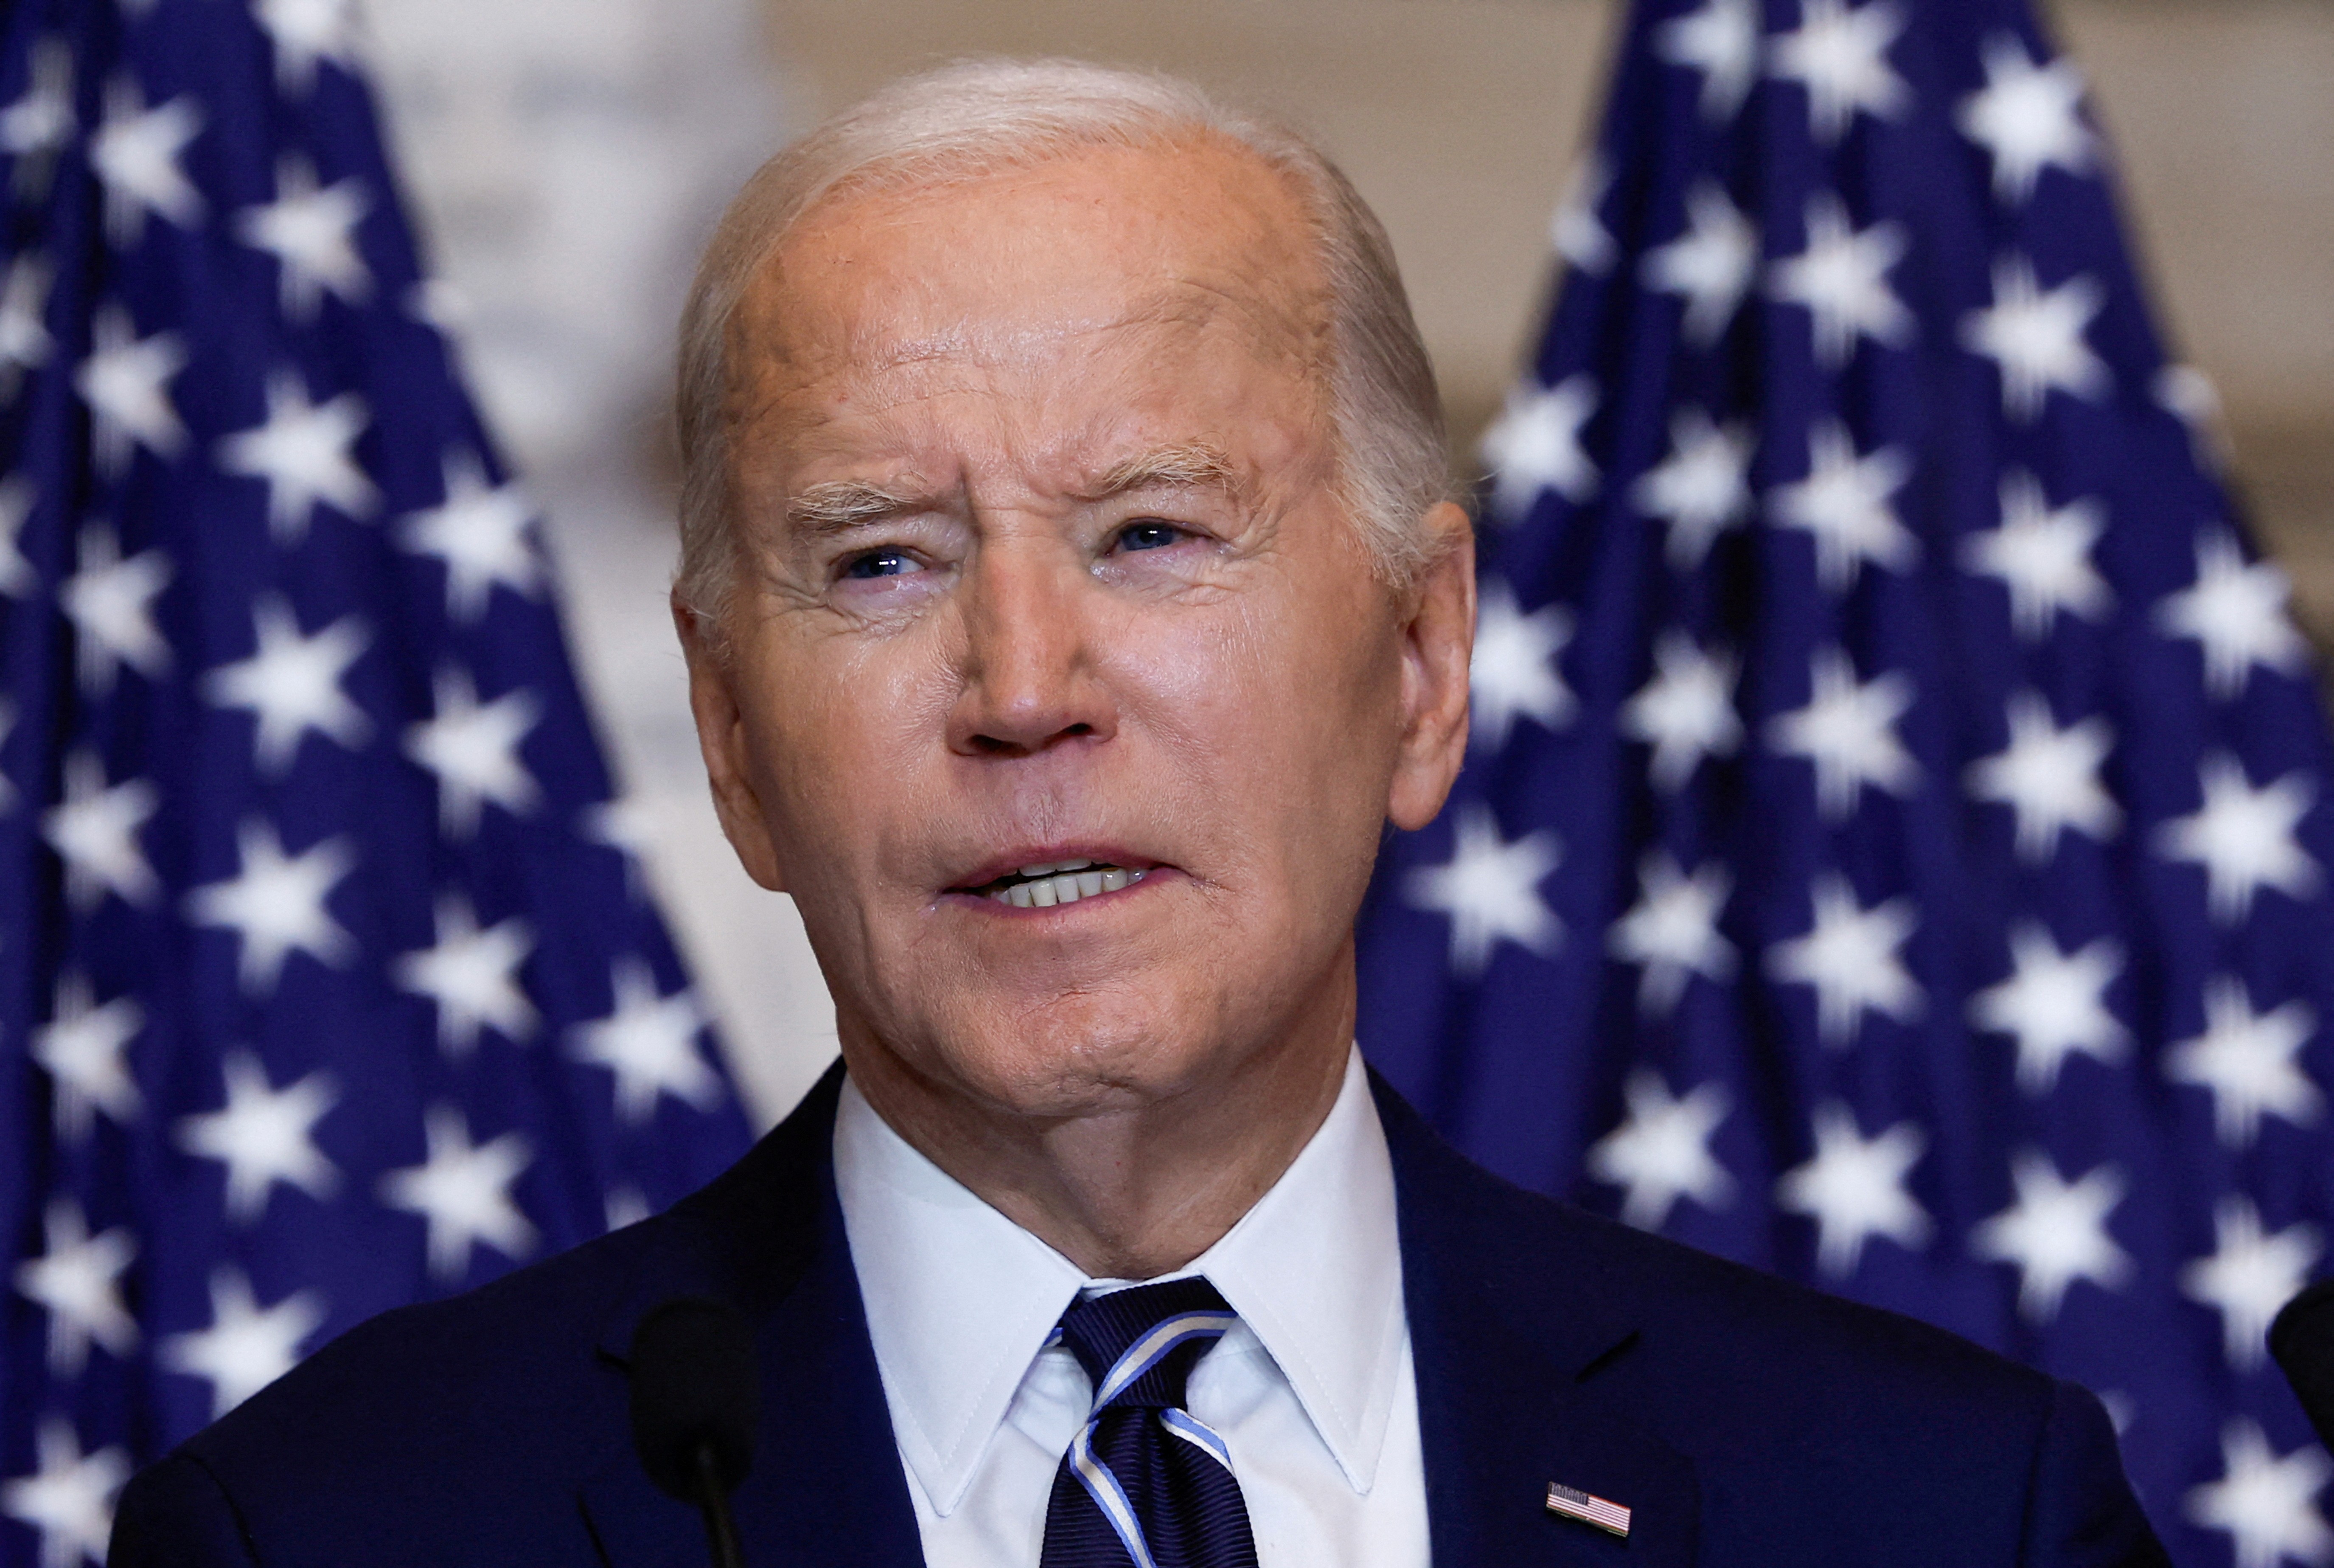 Biden vence primárias democratas de Michigan, mas enfrenta voto de protesto por apoio à guerra em Gaza